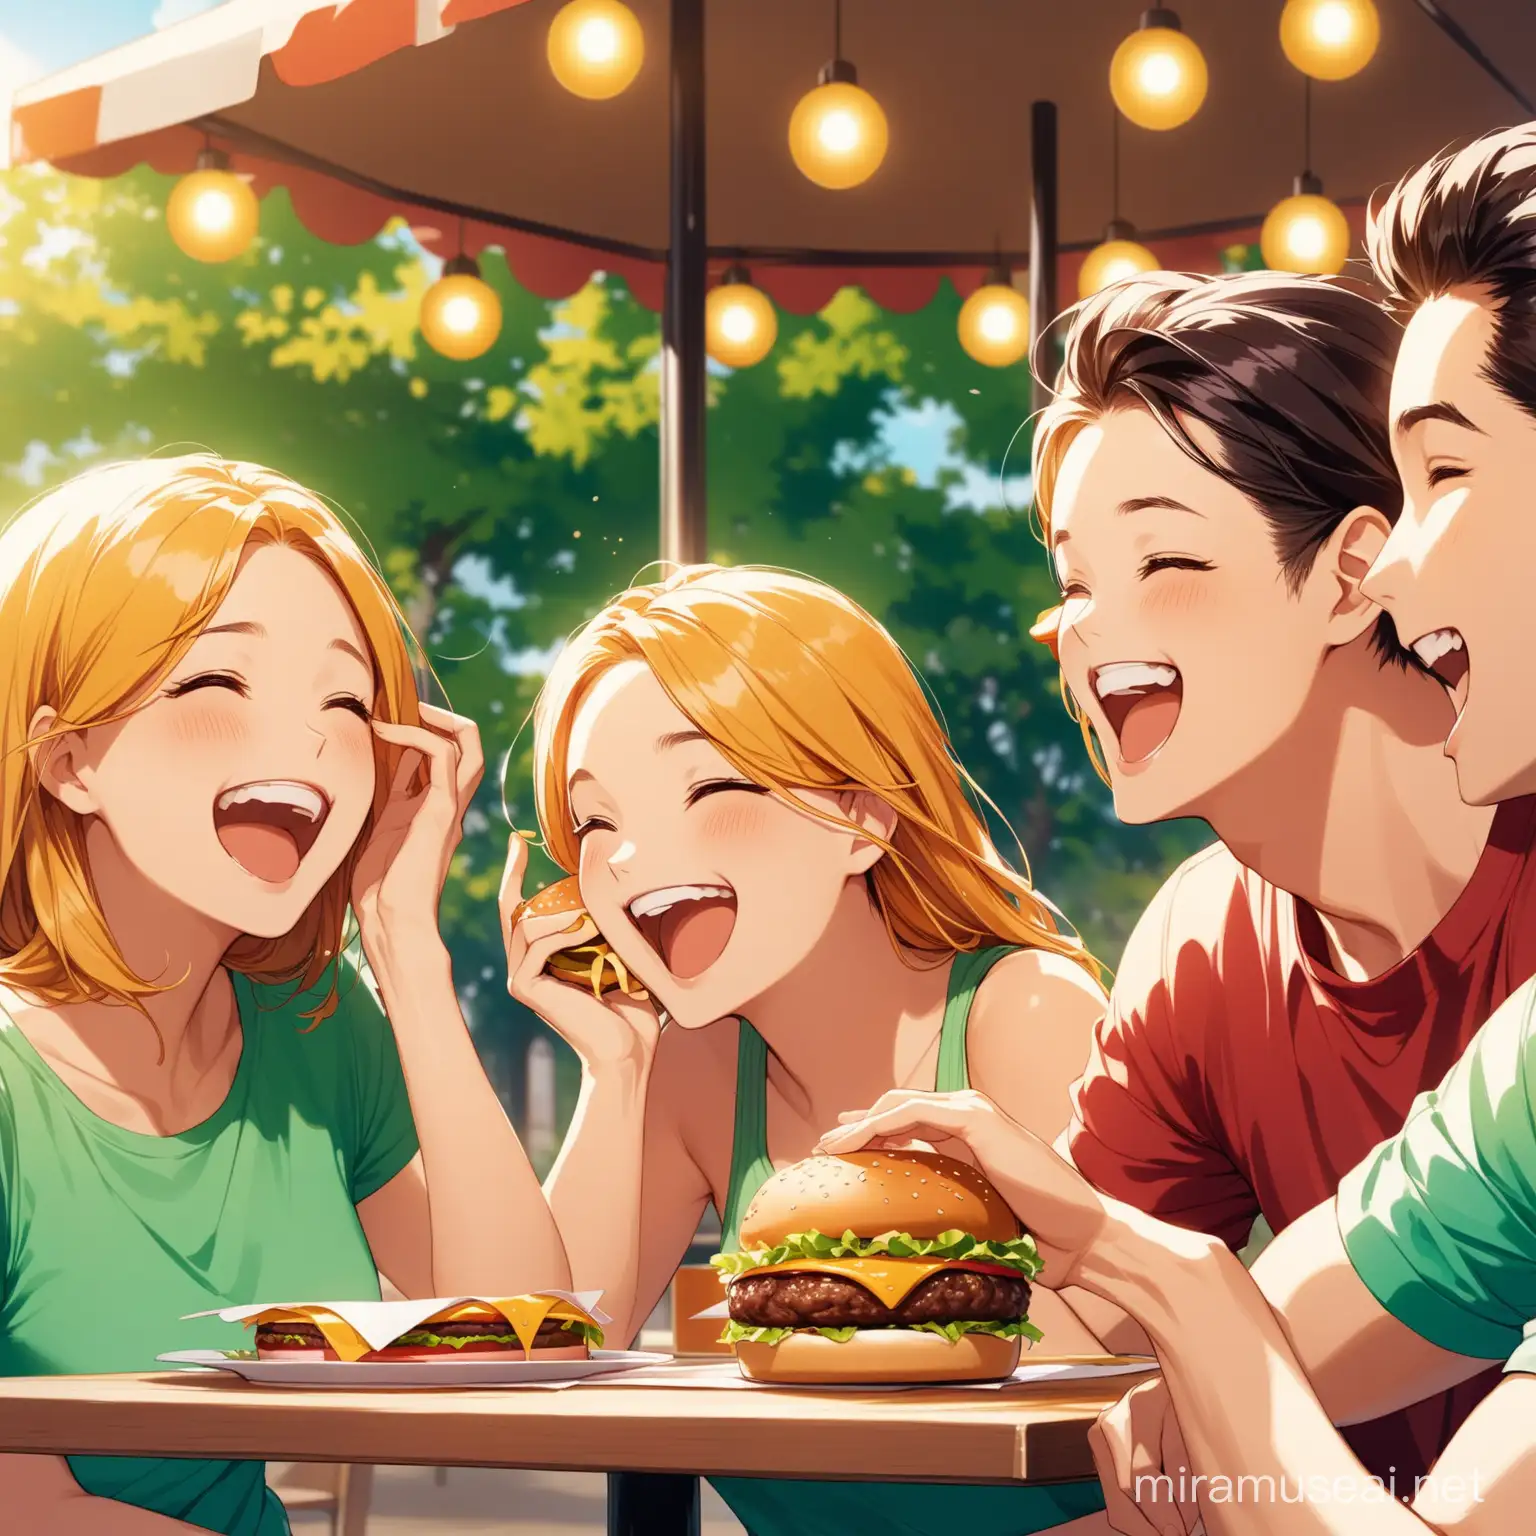 Friends Enjoying Delicious Burgers at a Vibrant Restaurant